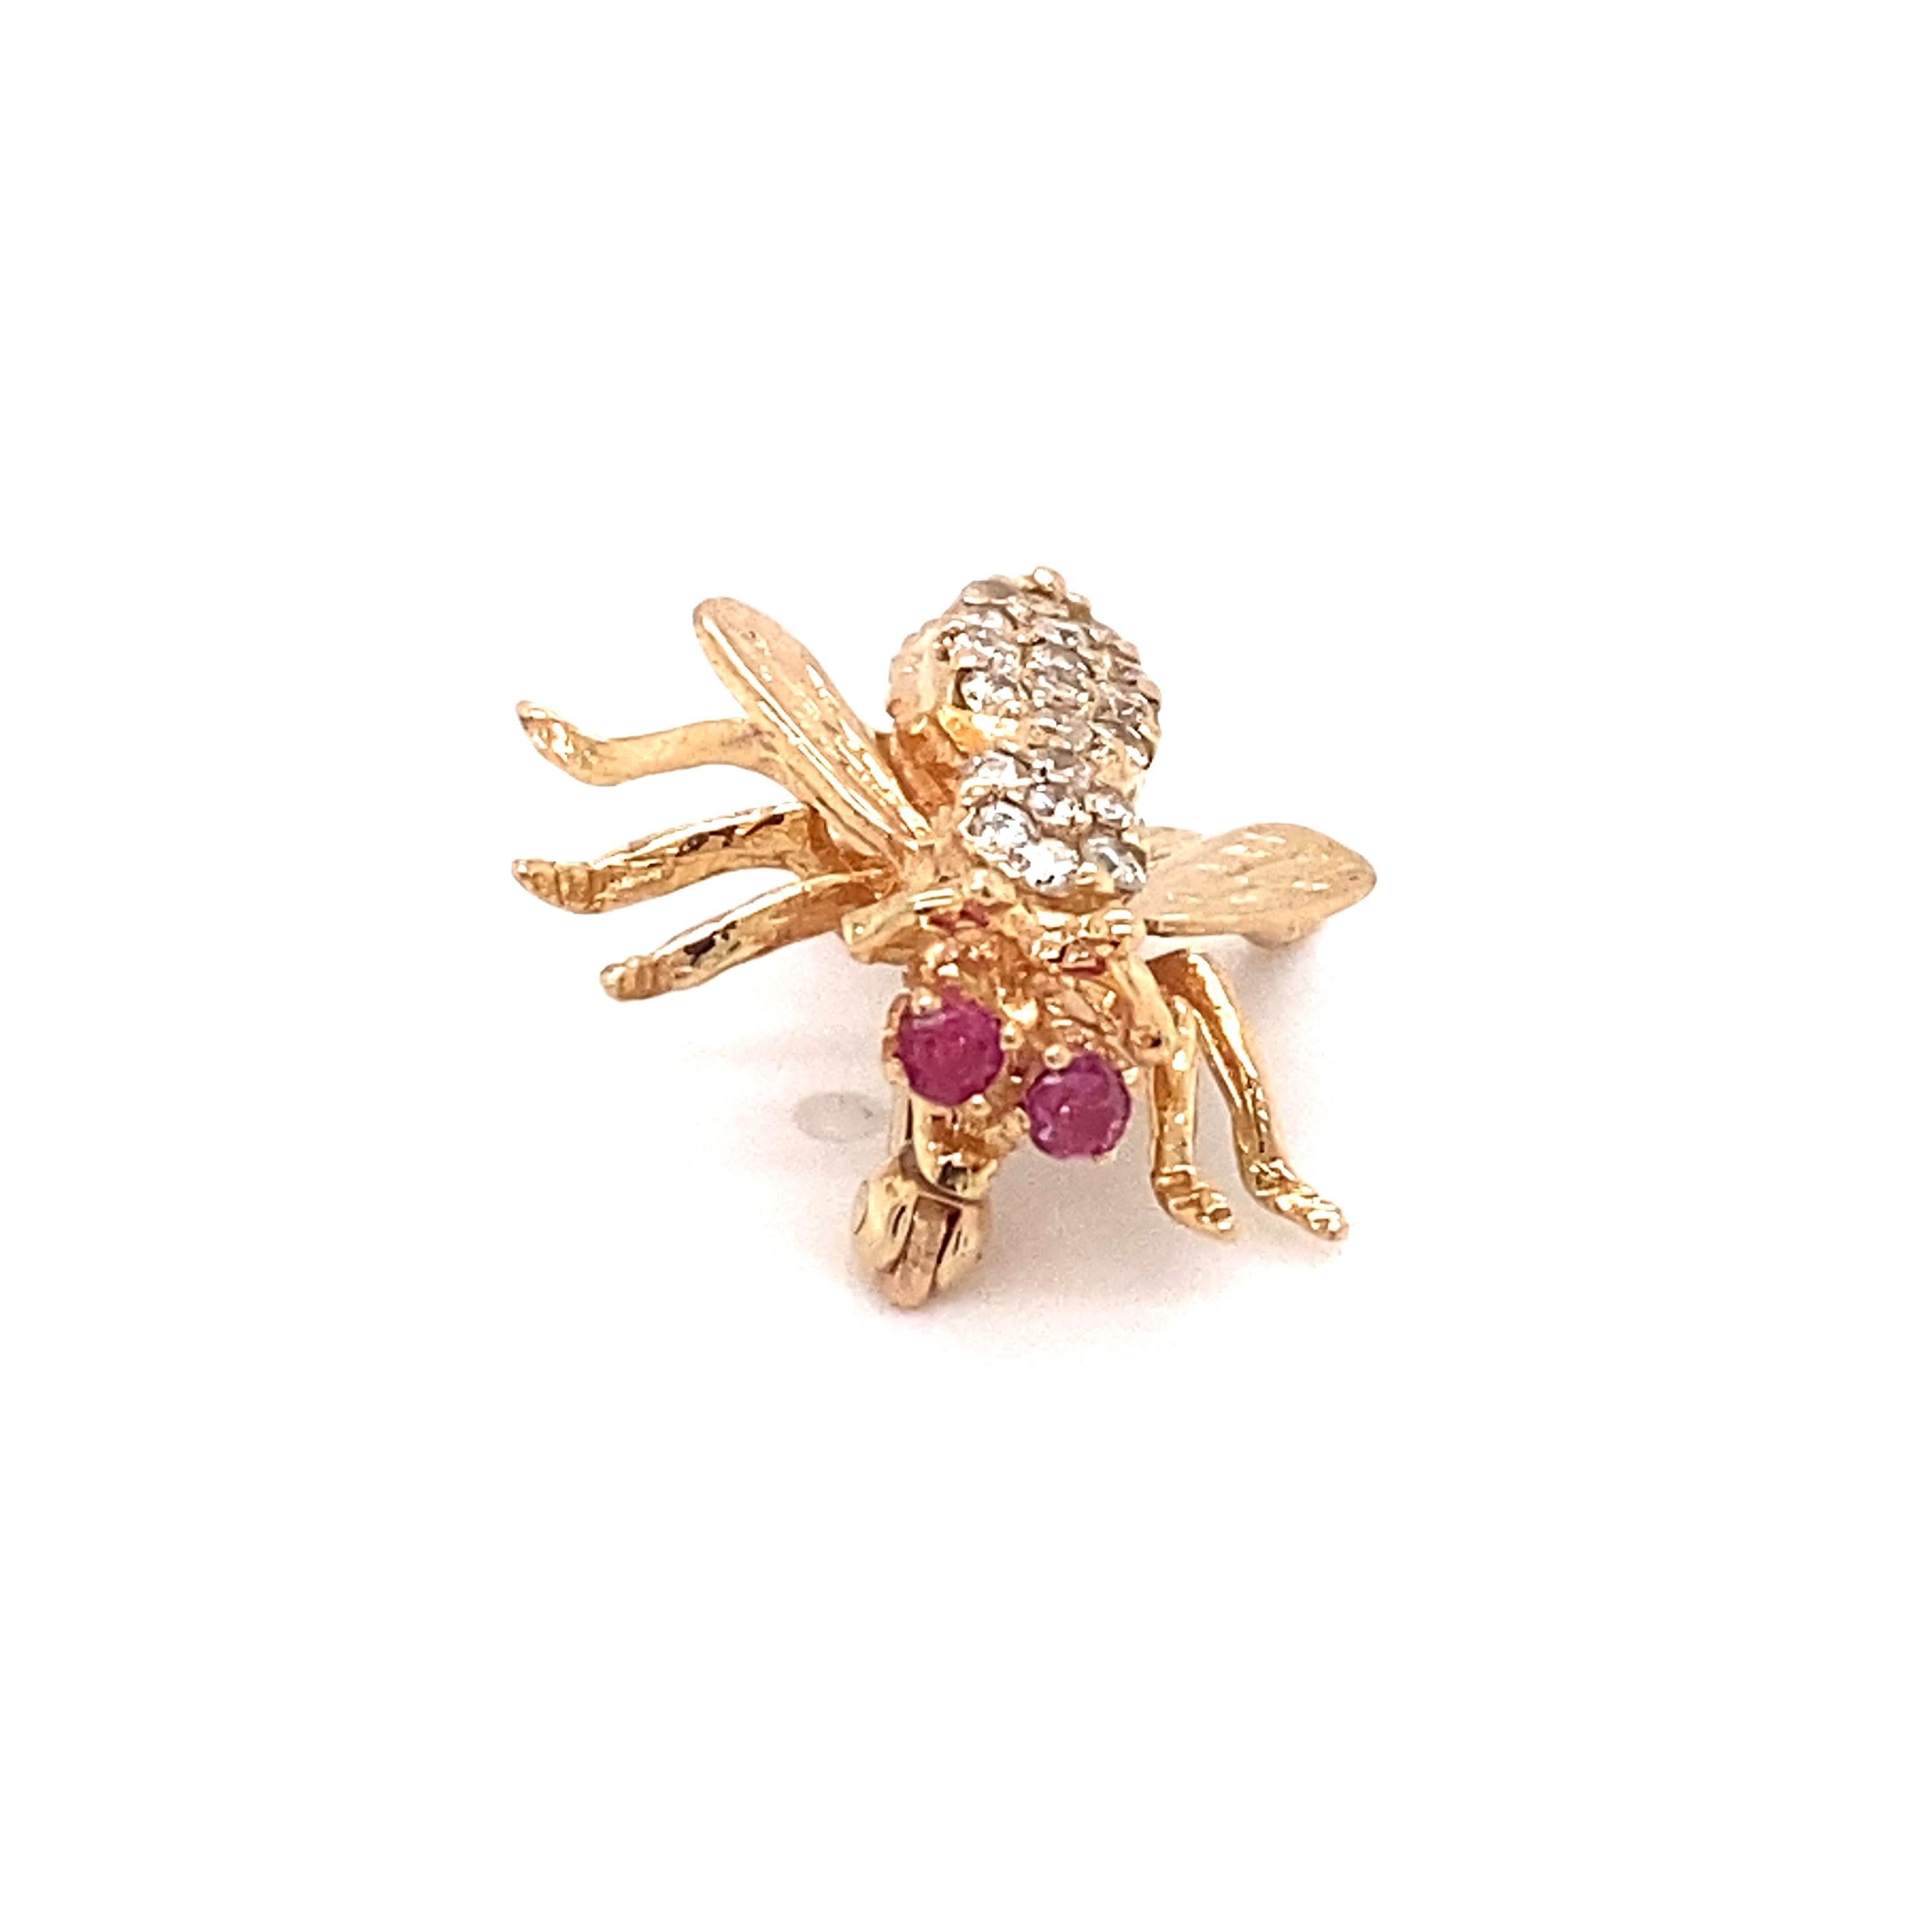 Modern 1980s Diamond Bee Pin with Ruby Eyes in 14 Karat Gold